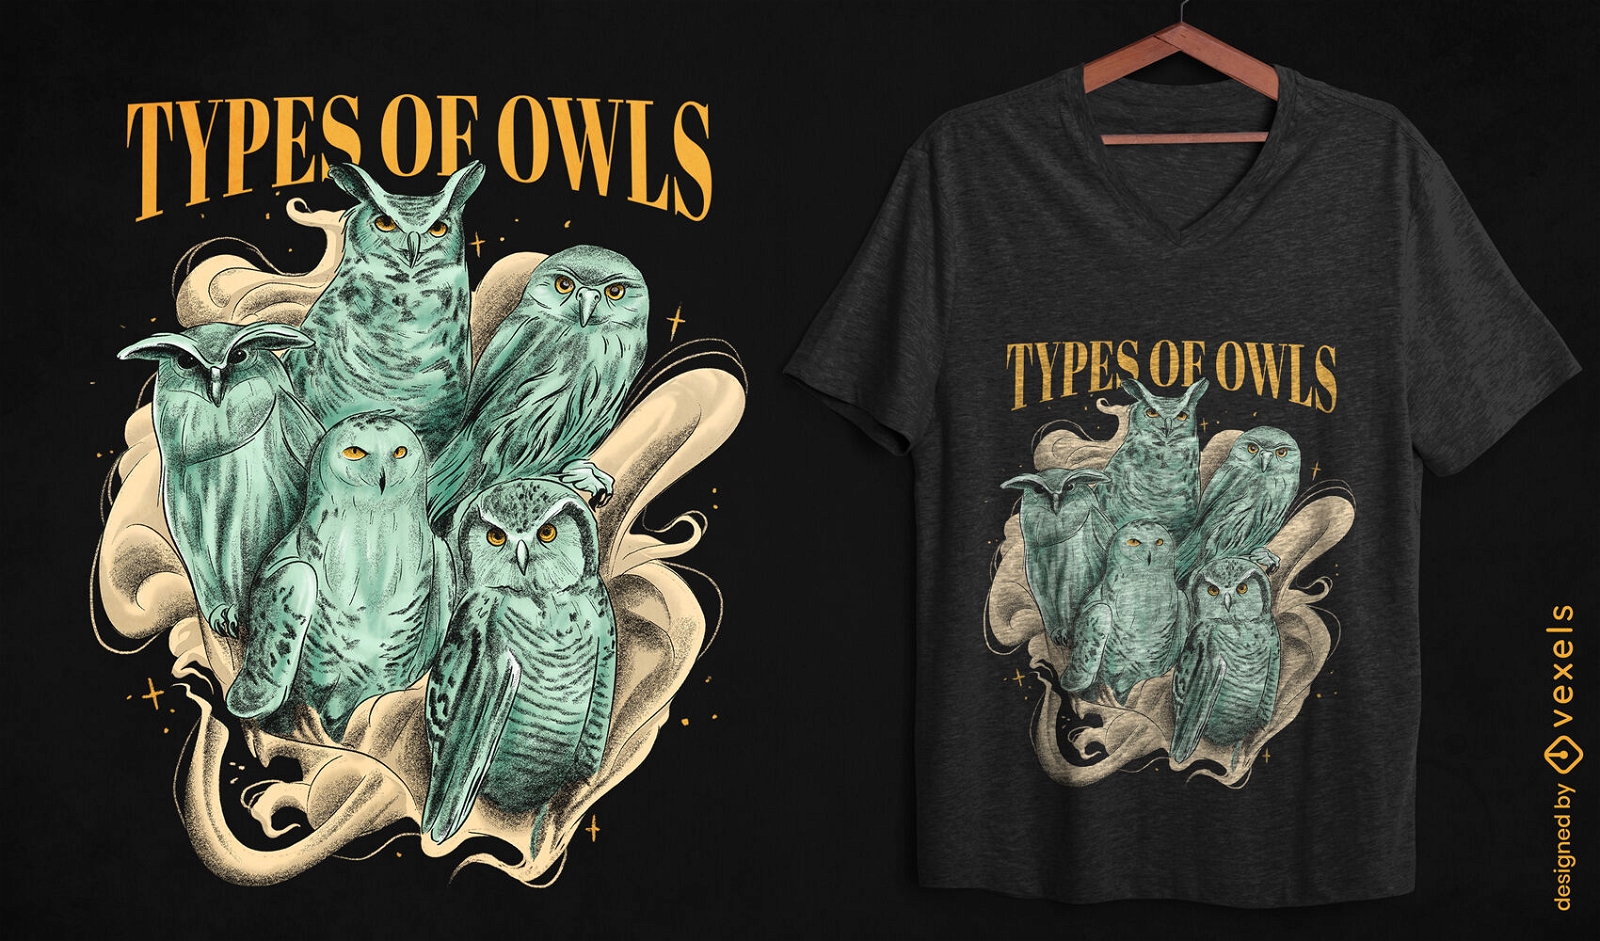 Types of owls t-shirt design 